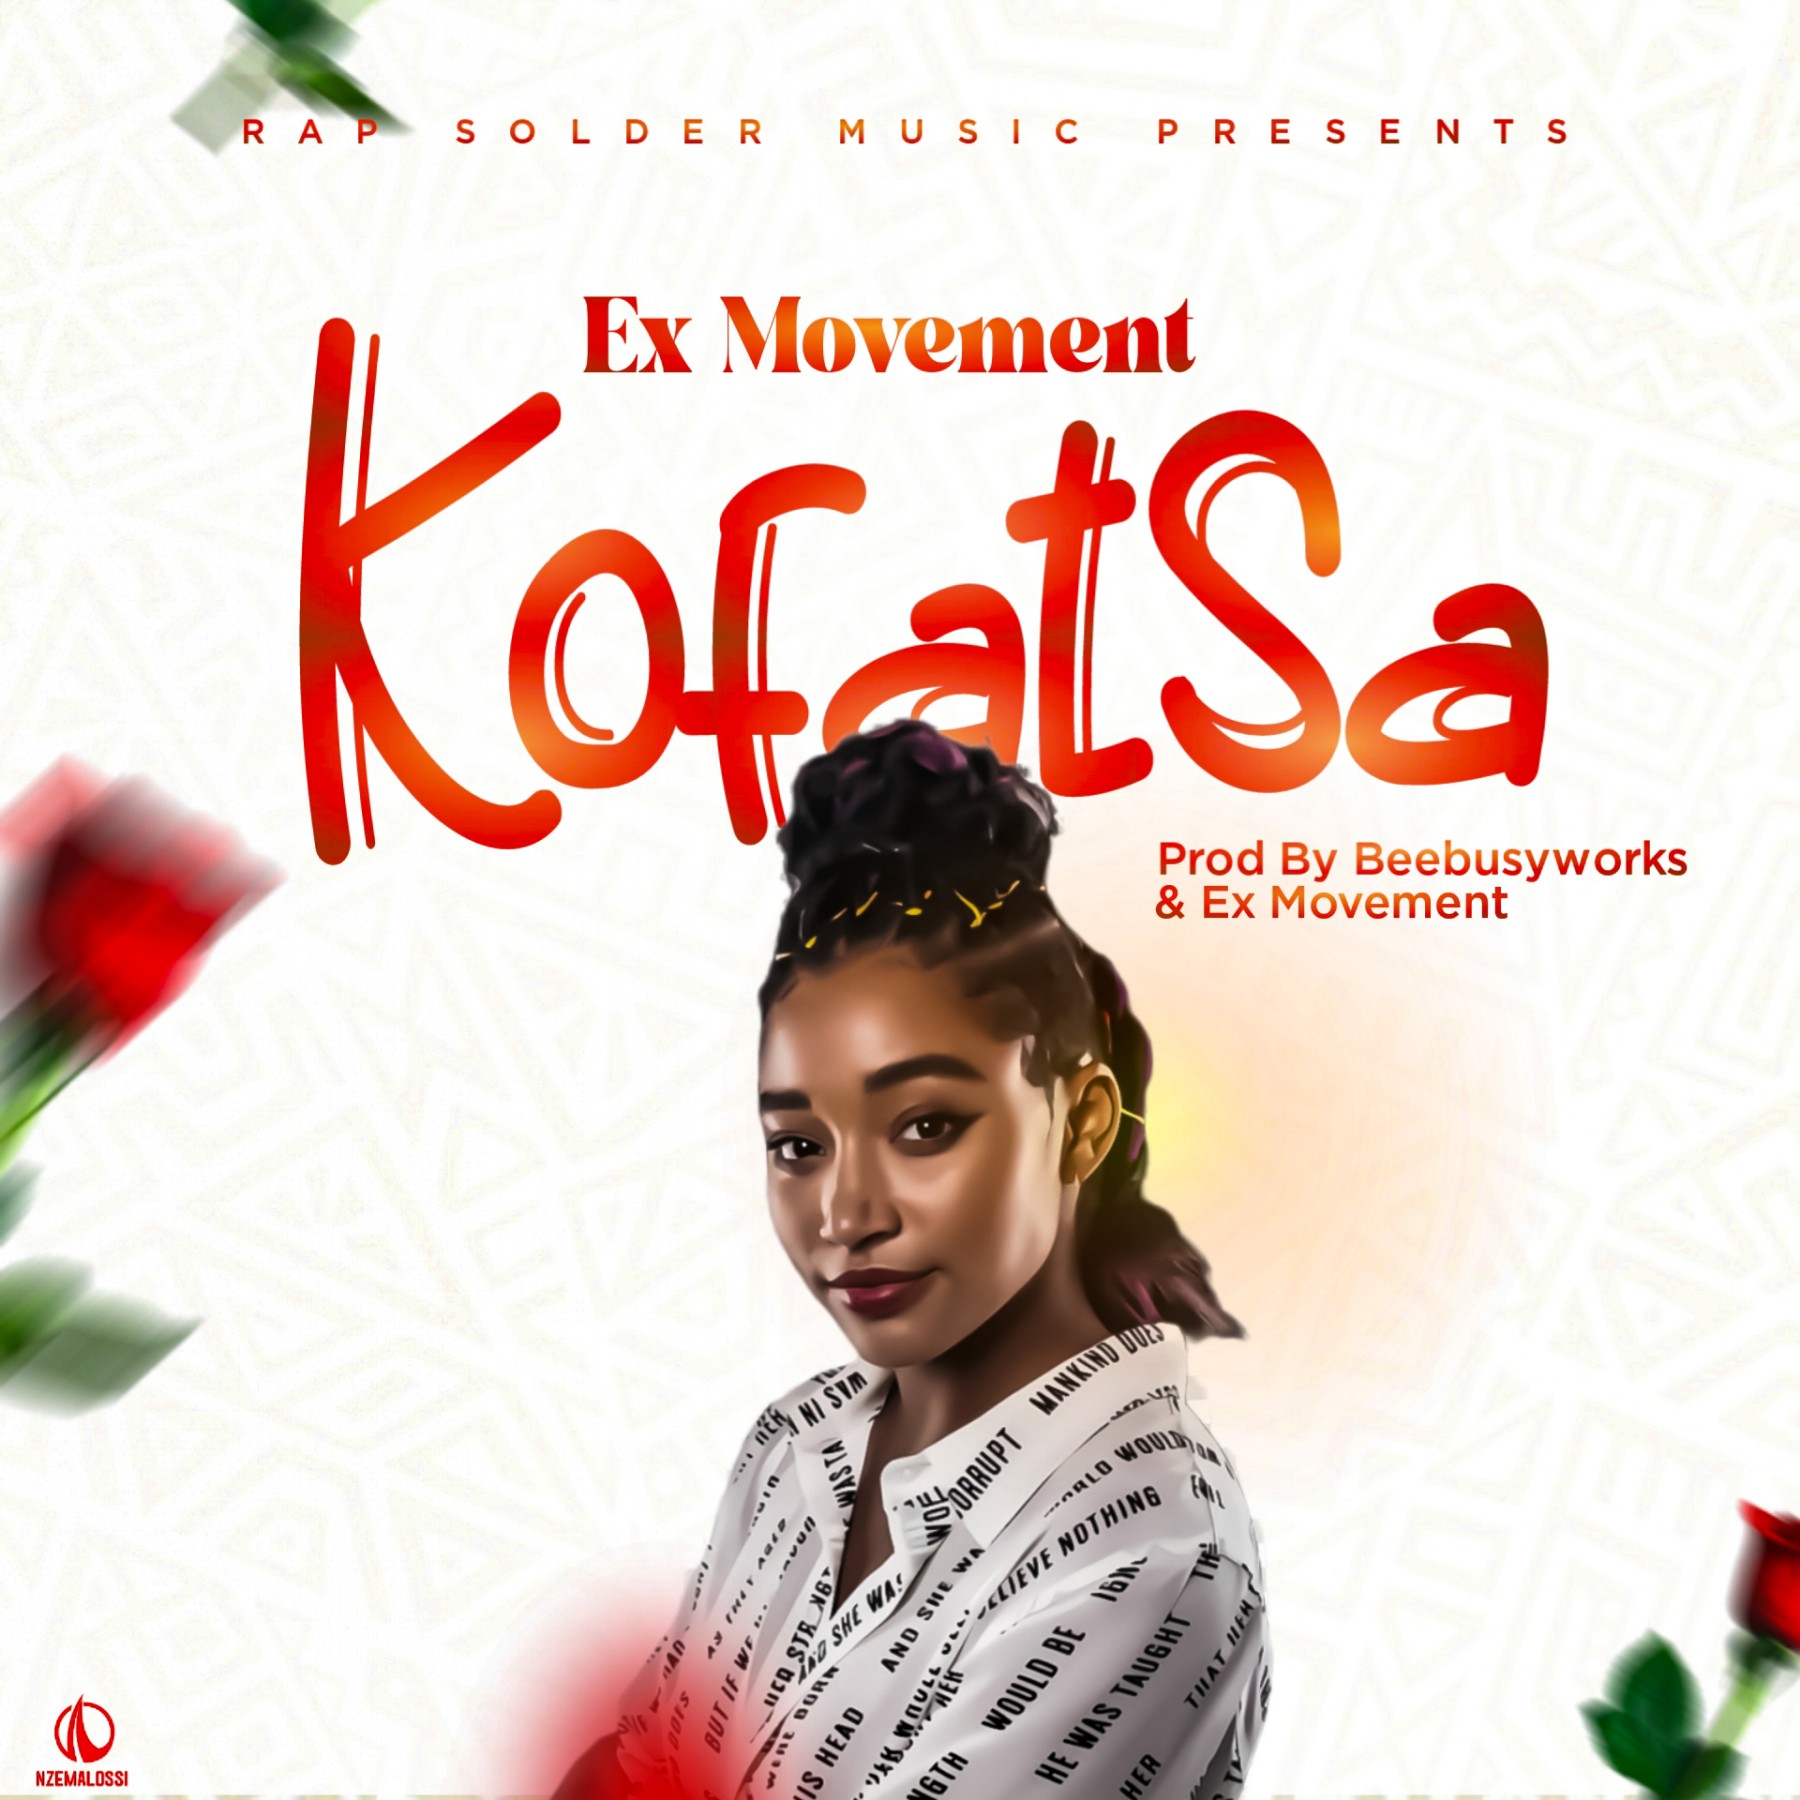 Ex-Movement-kofasa-Prod-By-Ex-Movemenet